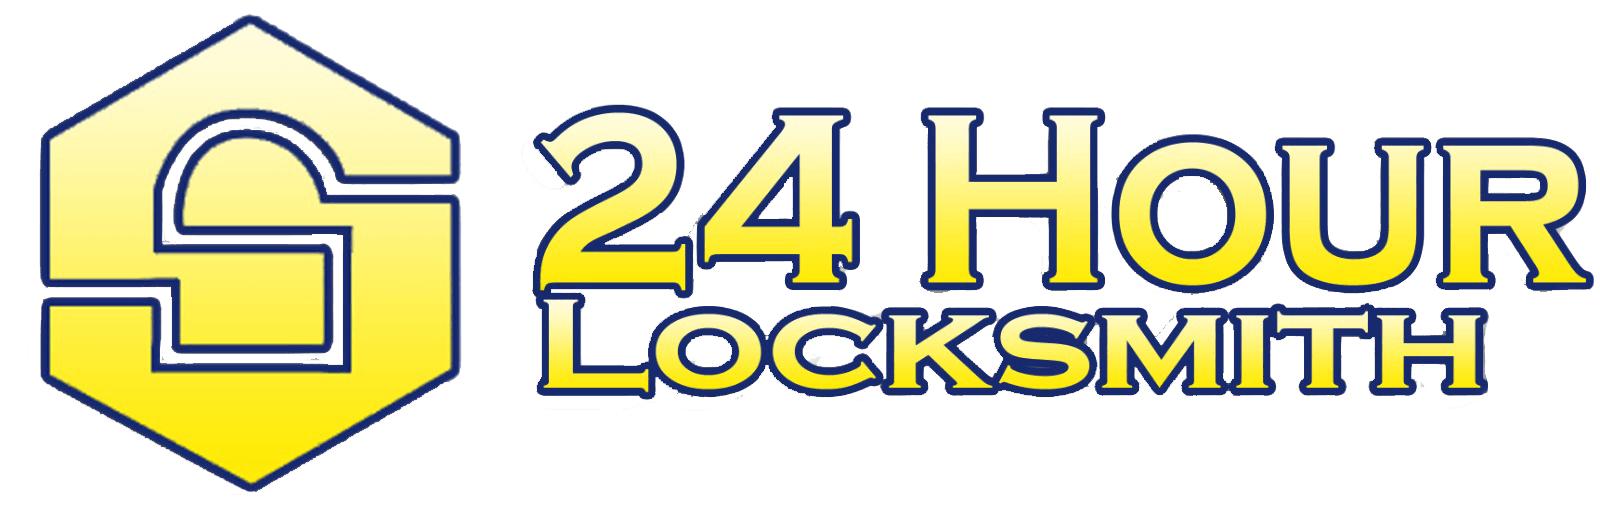 24 Hour Locksmith in Los Angeles, CA